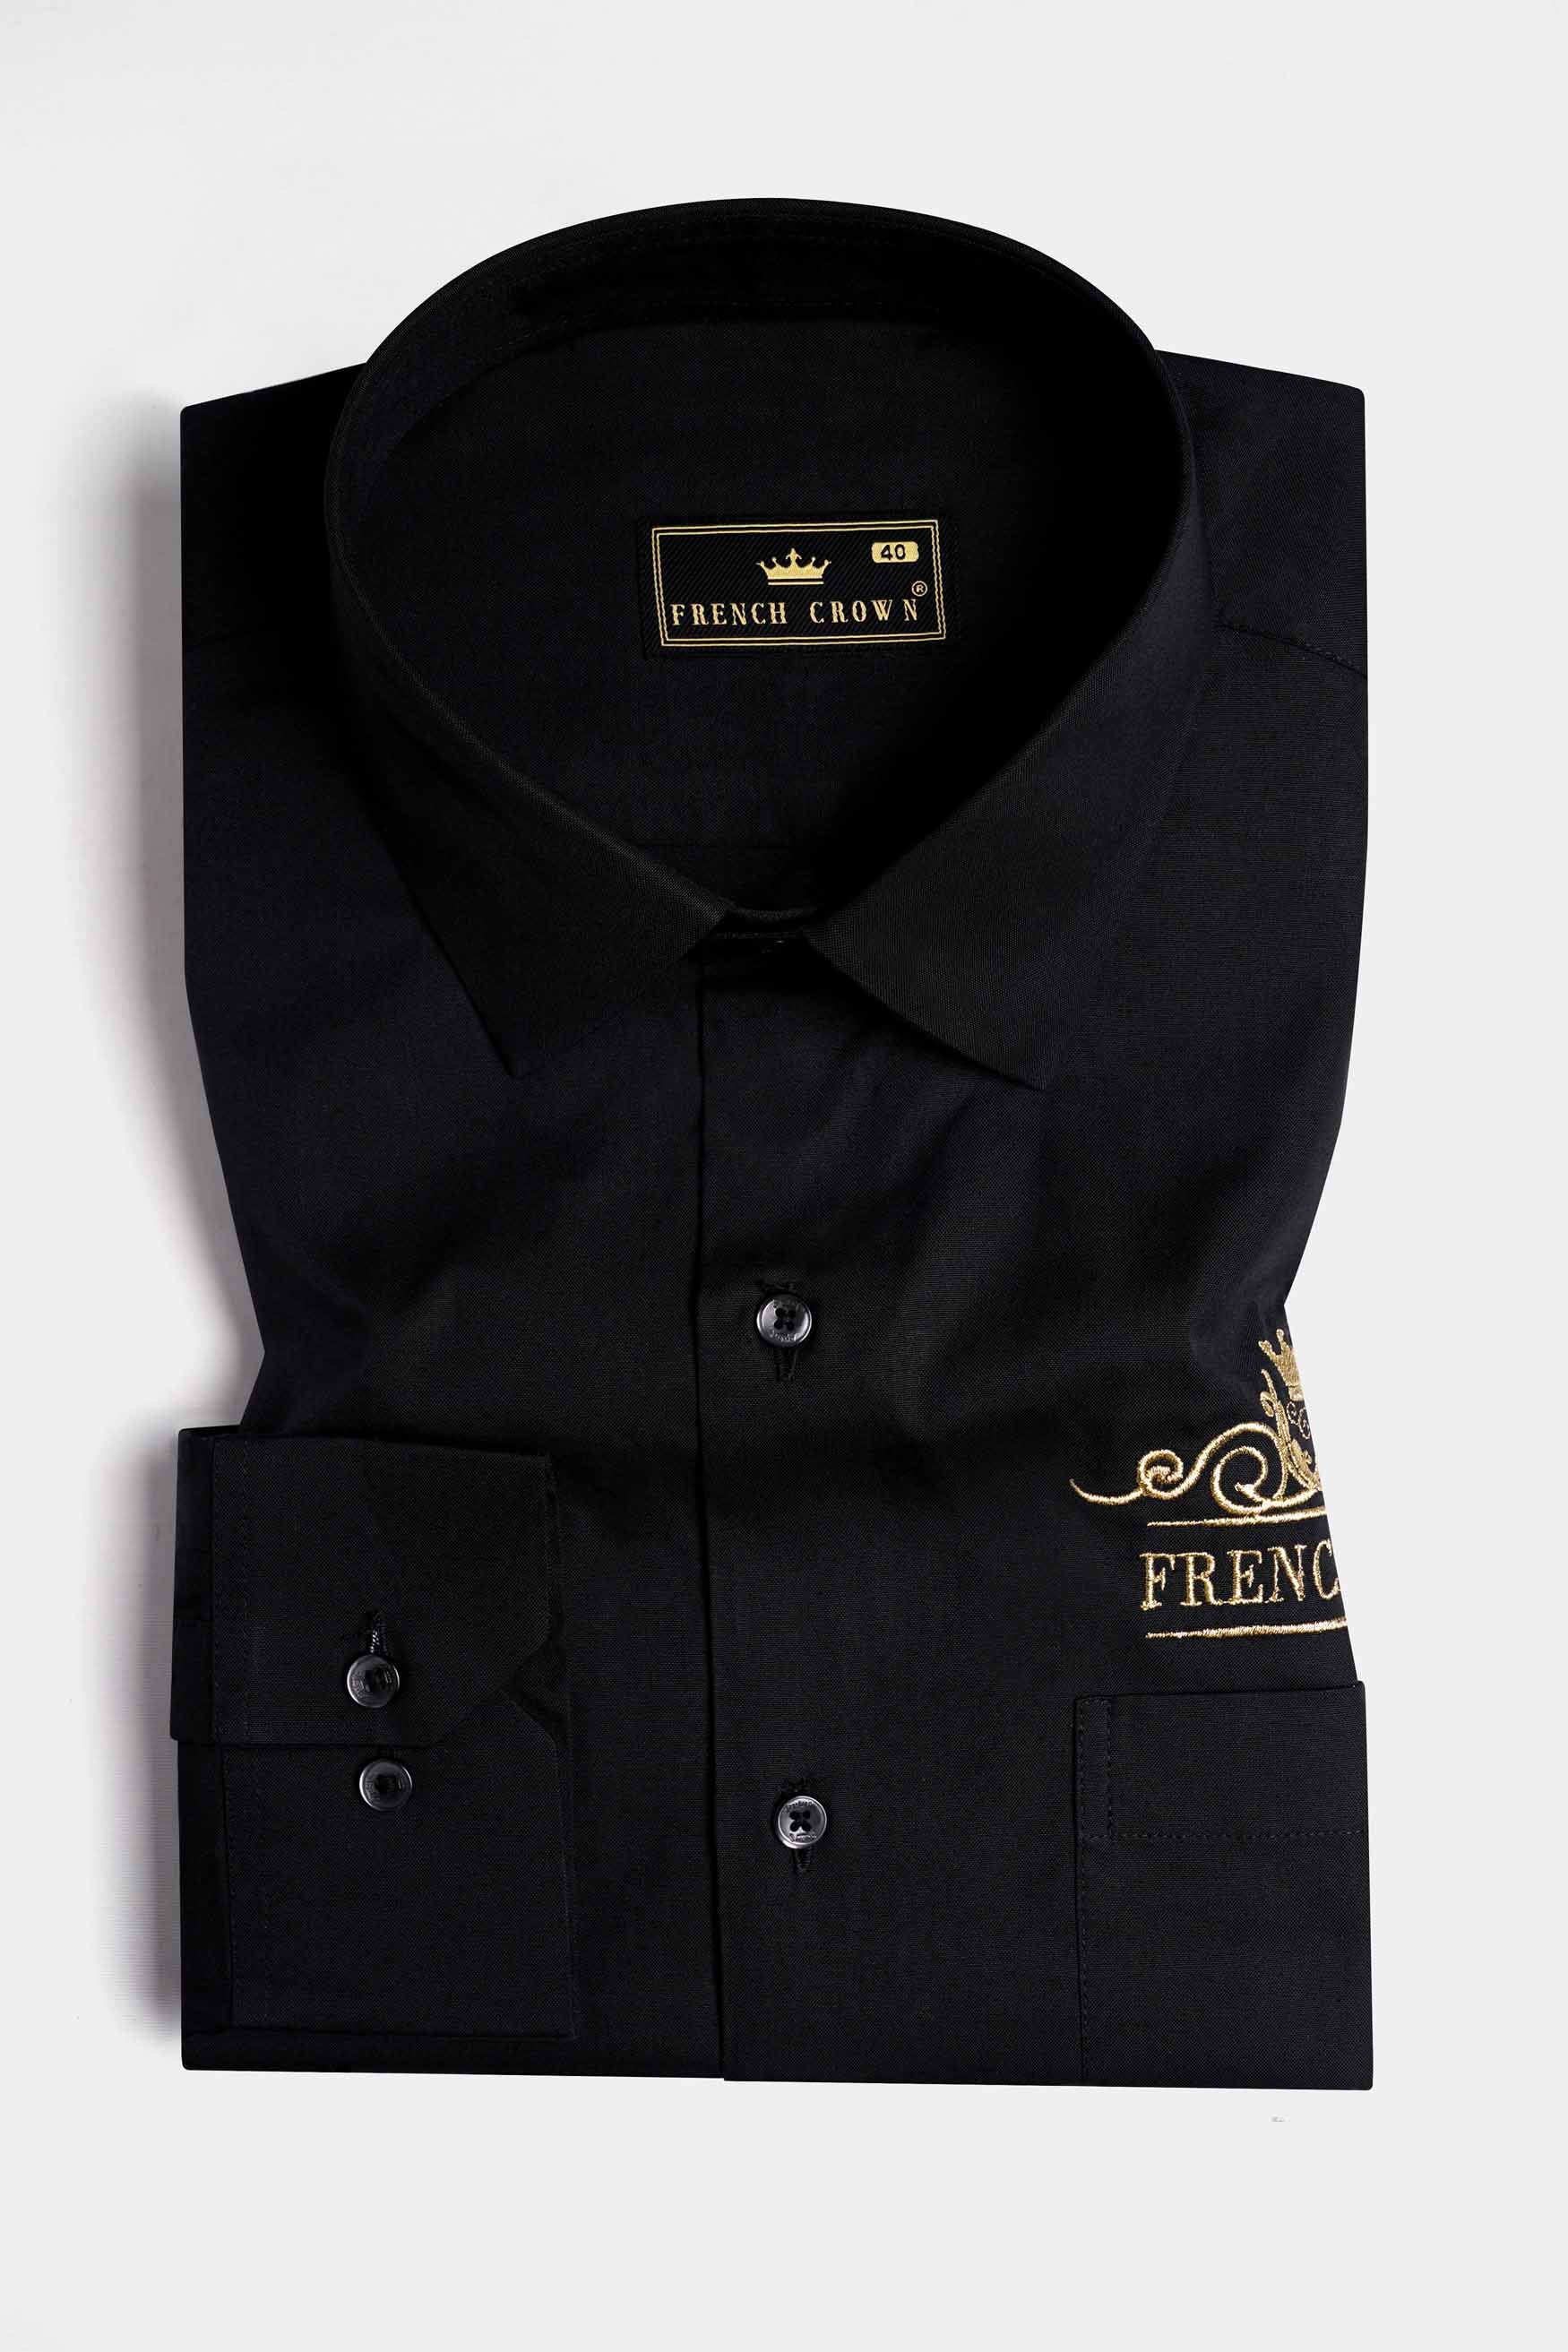 Jade Black French Crown Embroidered Royal Oxford Designer Shirt